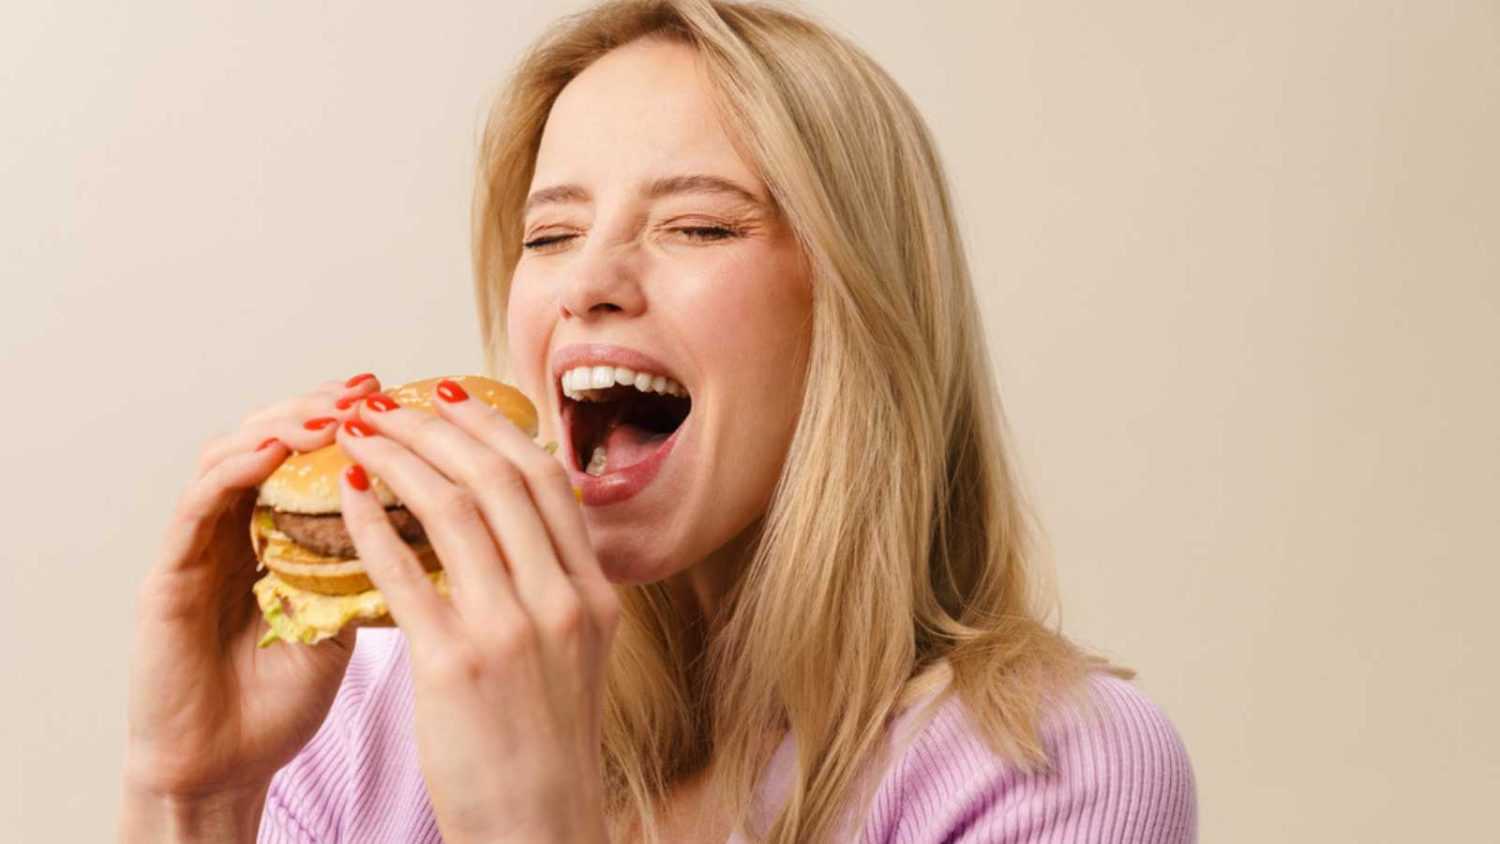 Happy beautiful hungry girl eating hamburger on camera isolated over white background